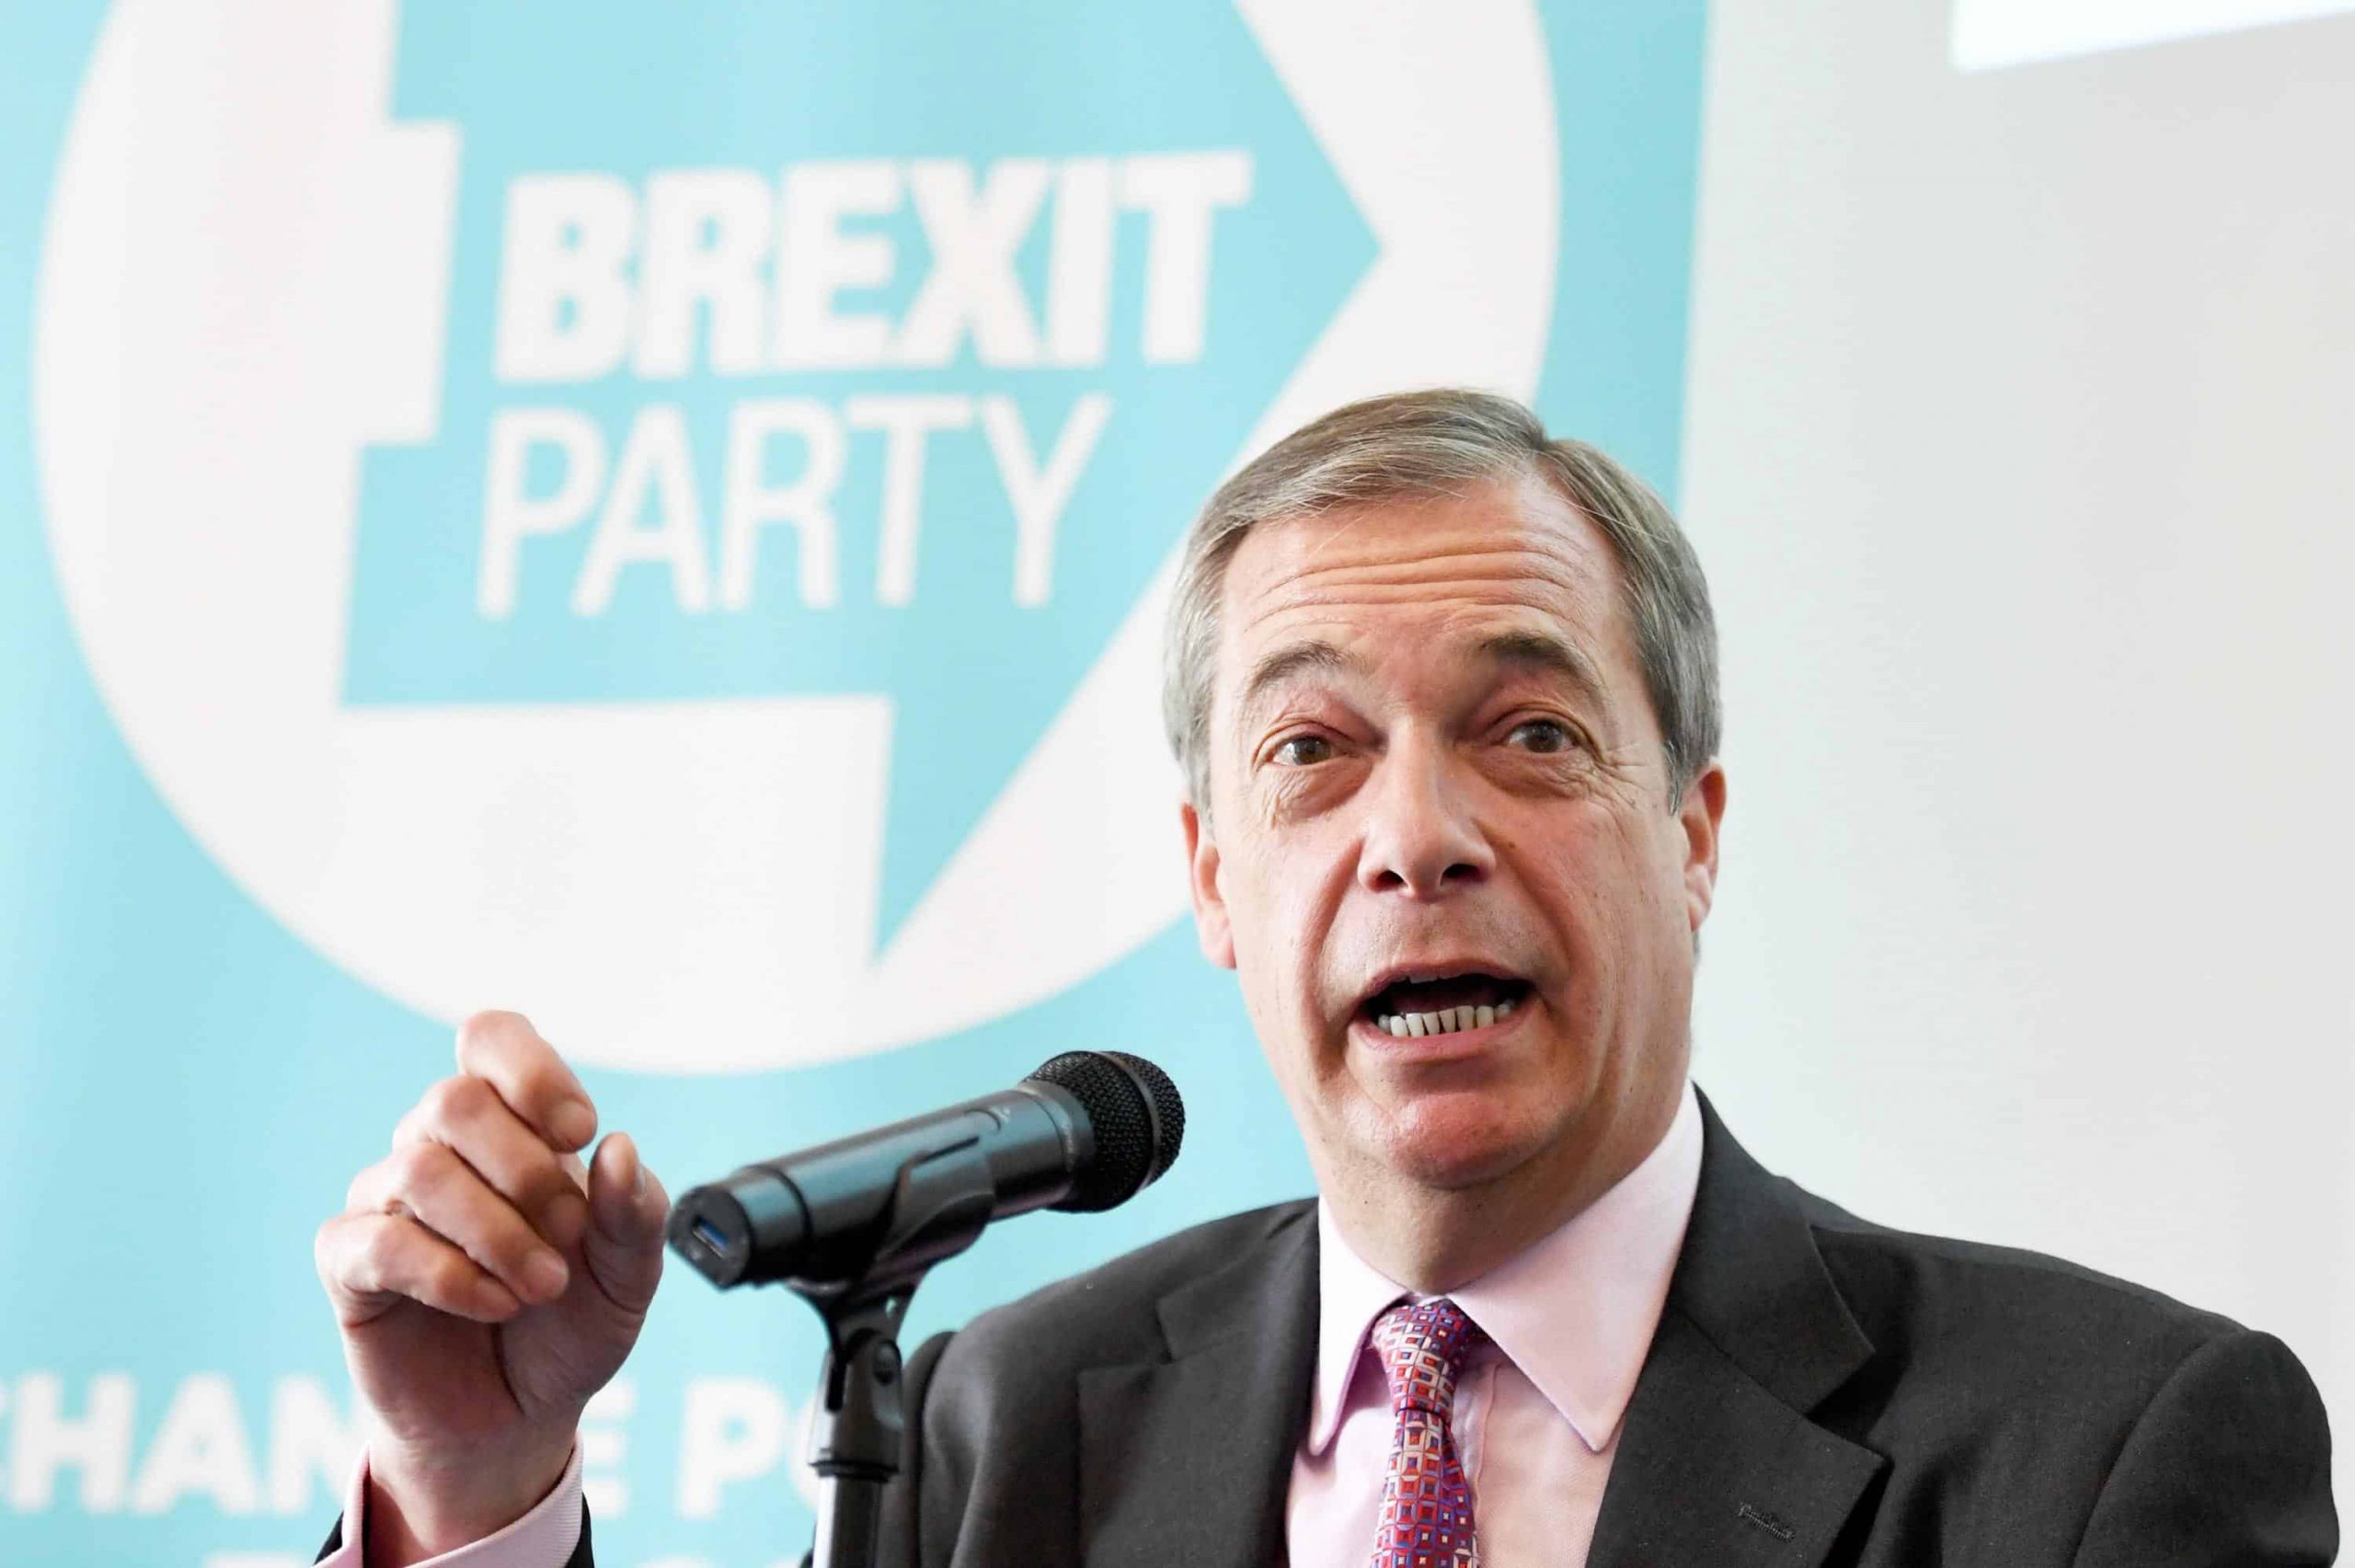 Nigel Farage’s radio clash over EU army investigated by Ofcom